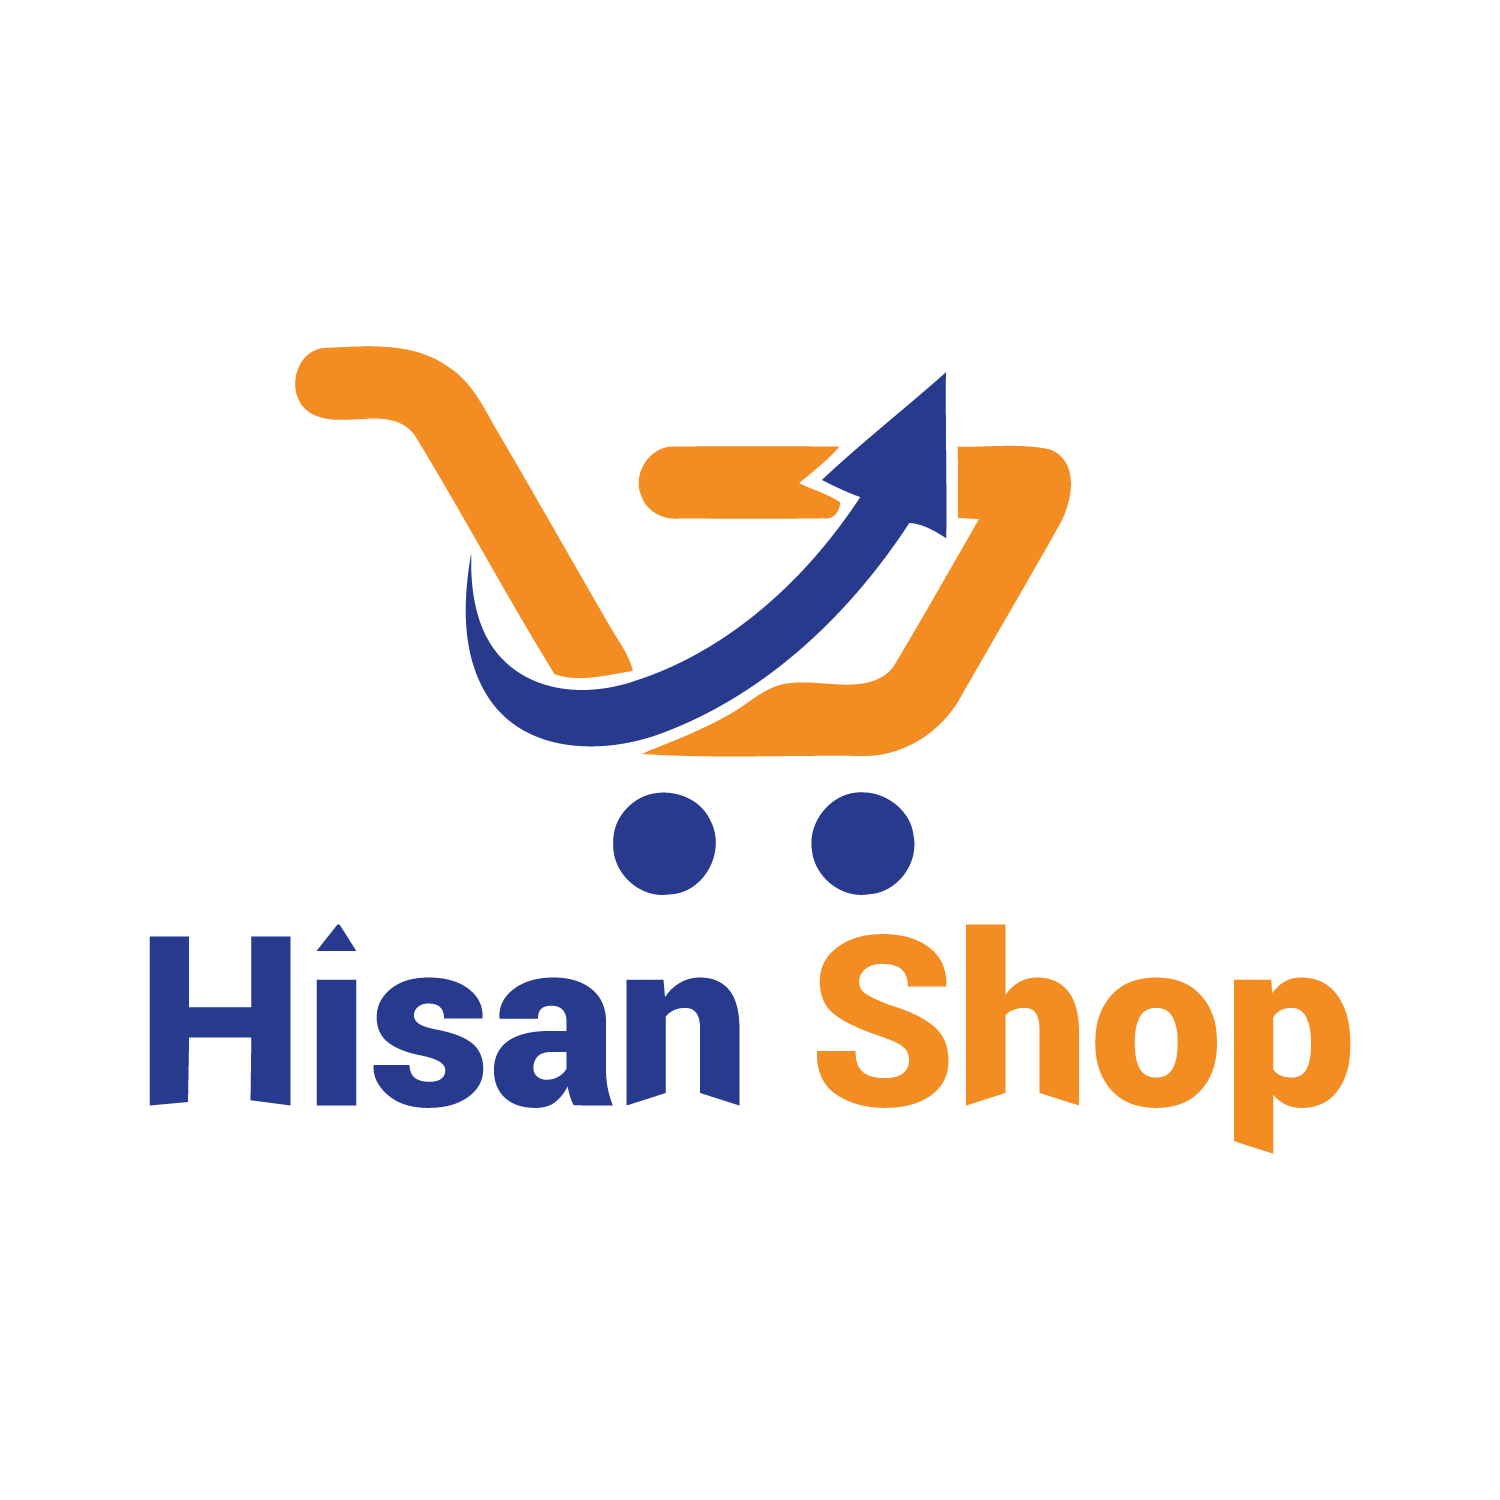 Hisan Shop